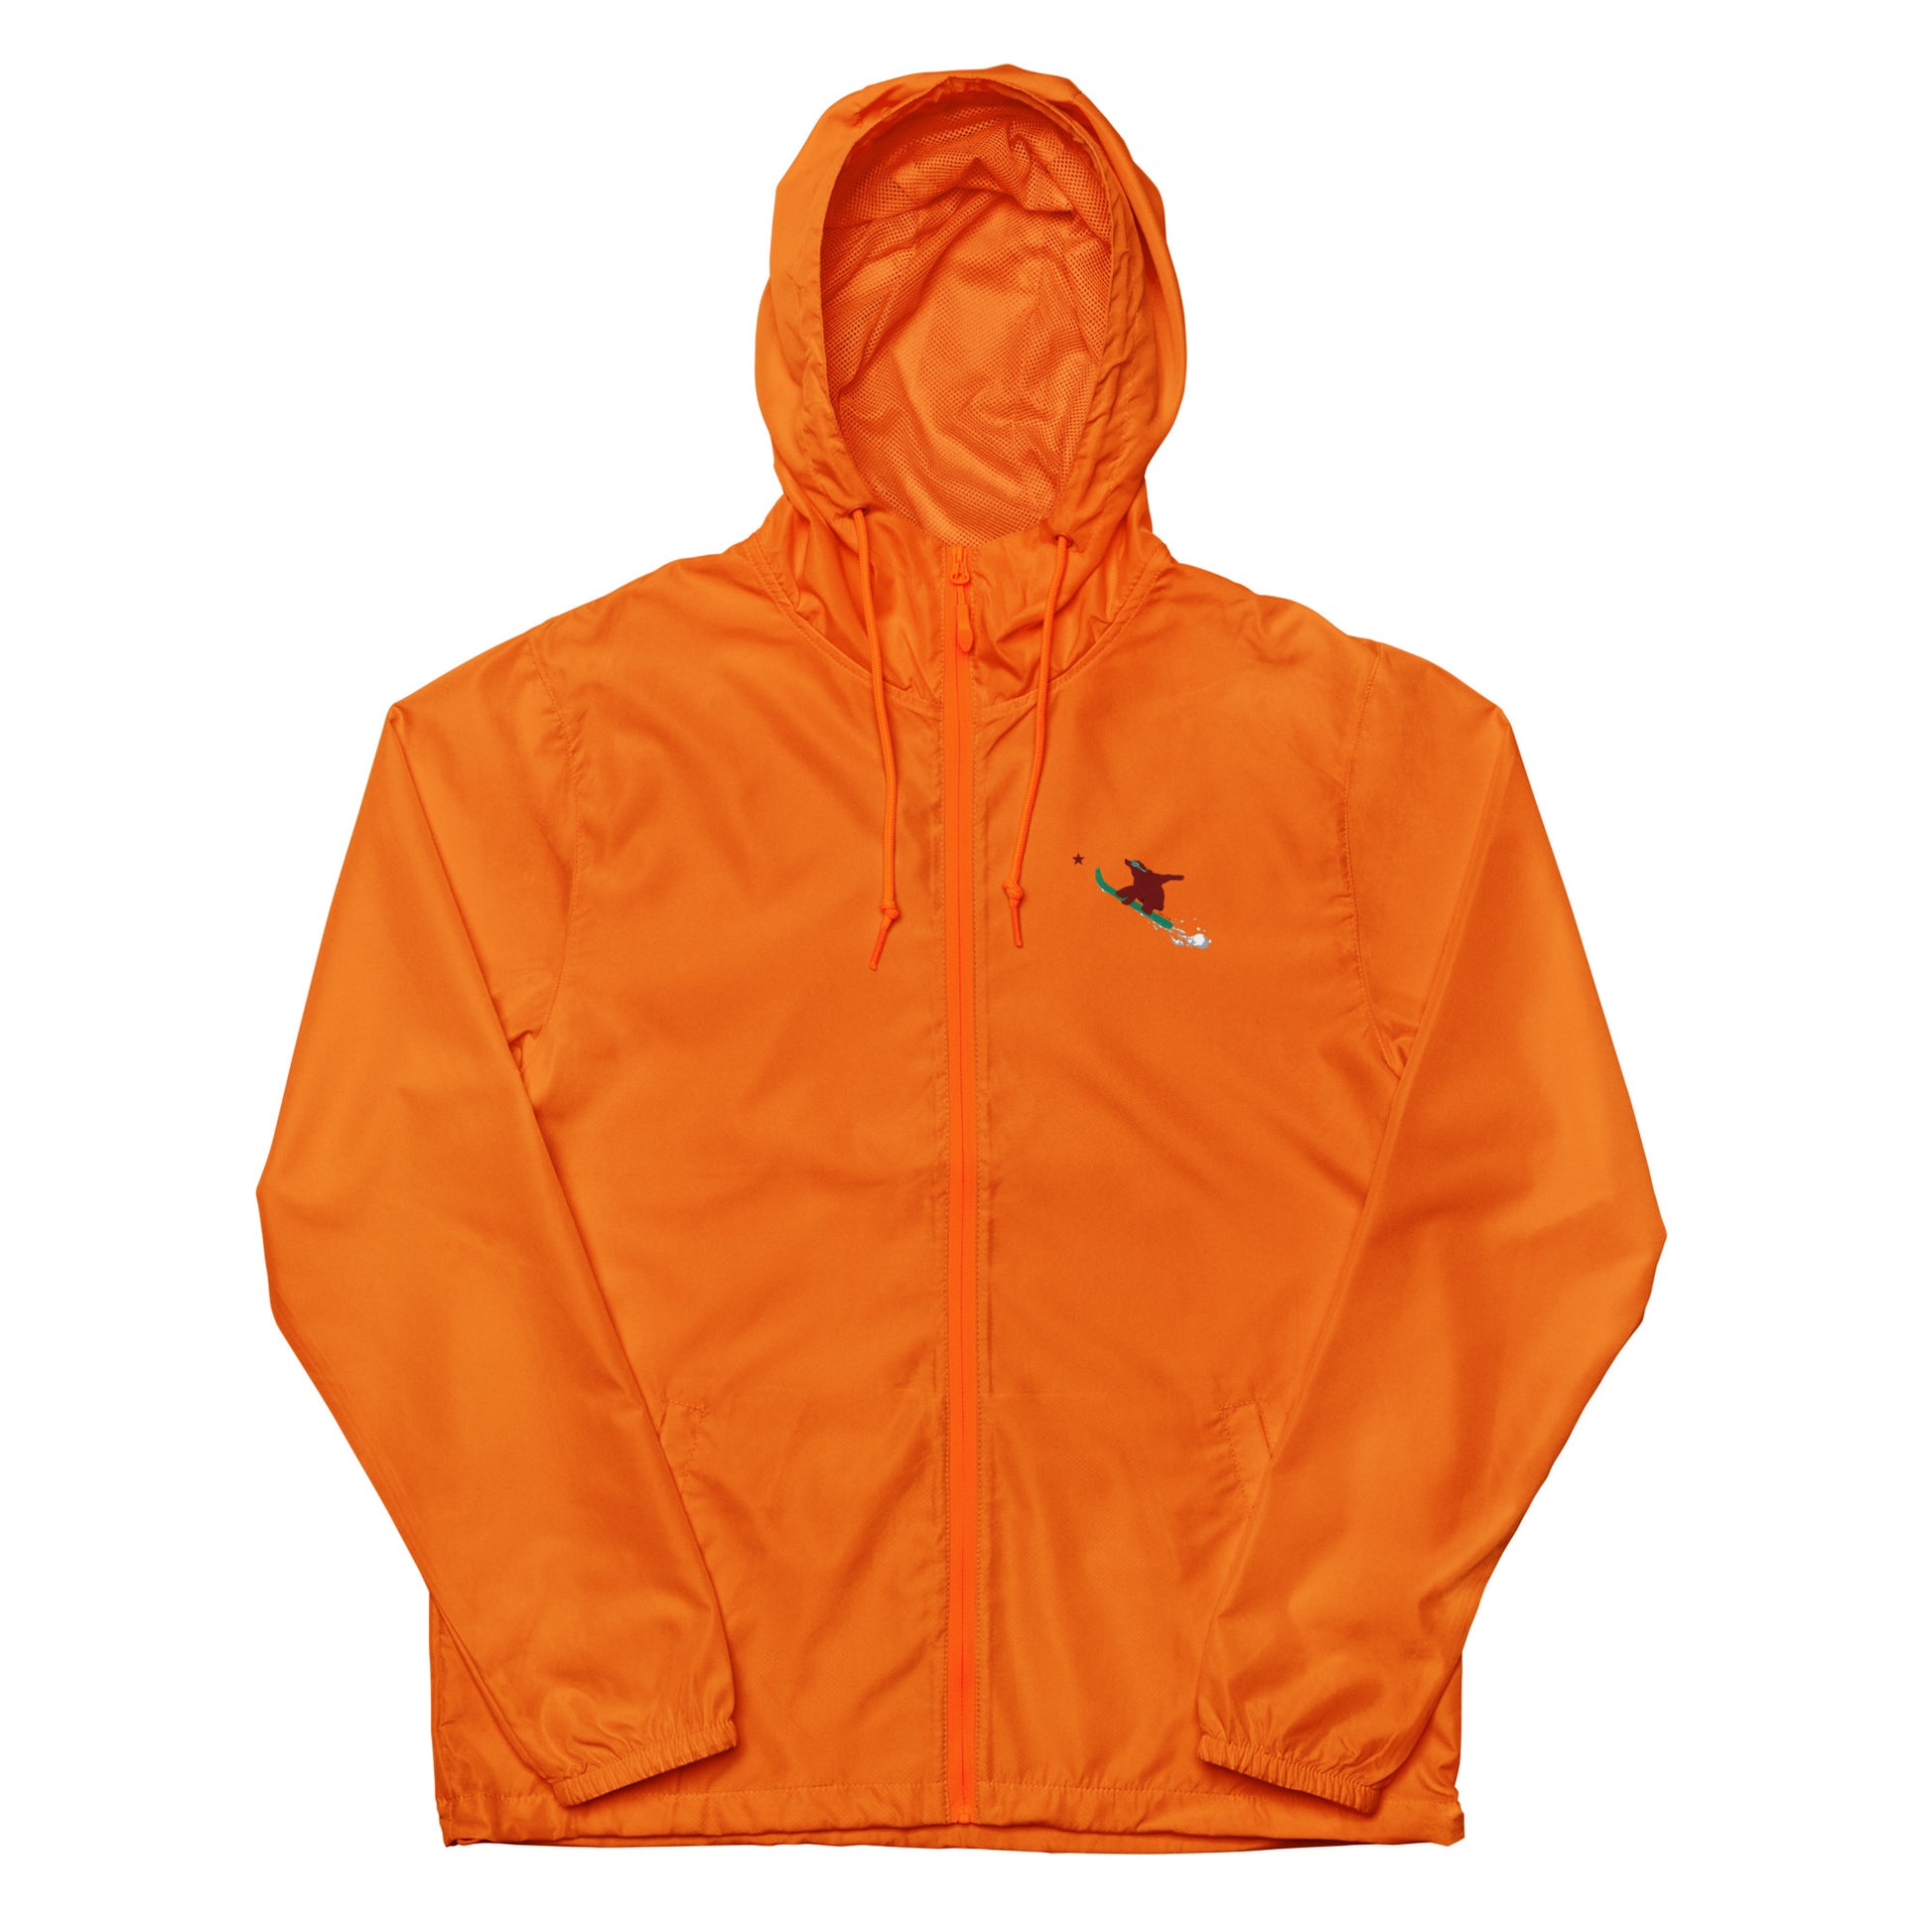 orange lightweight california snowboard jacket